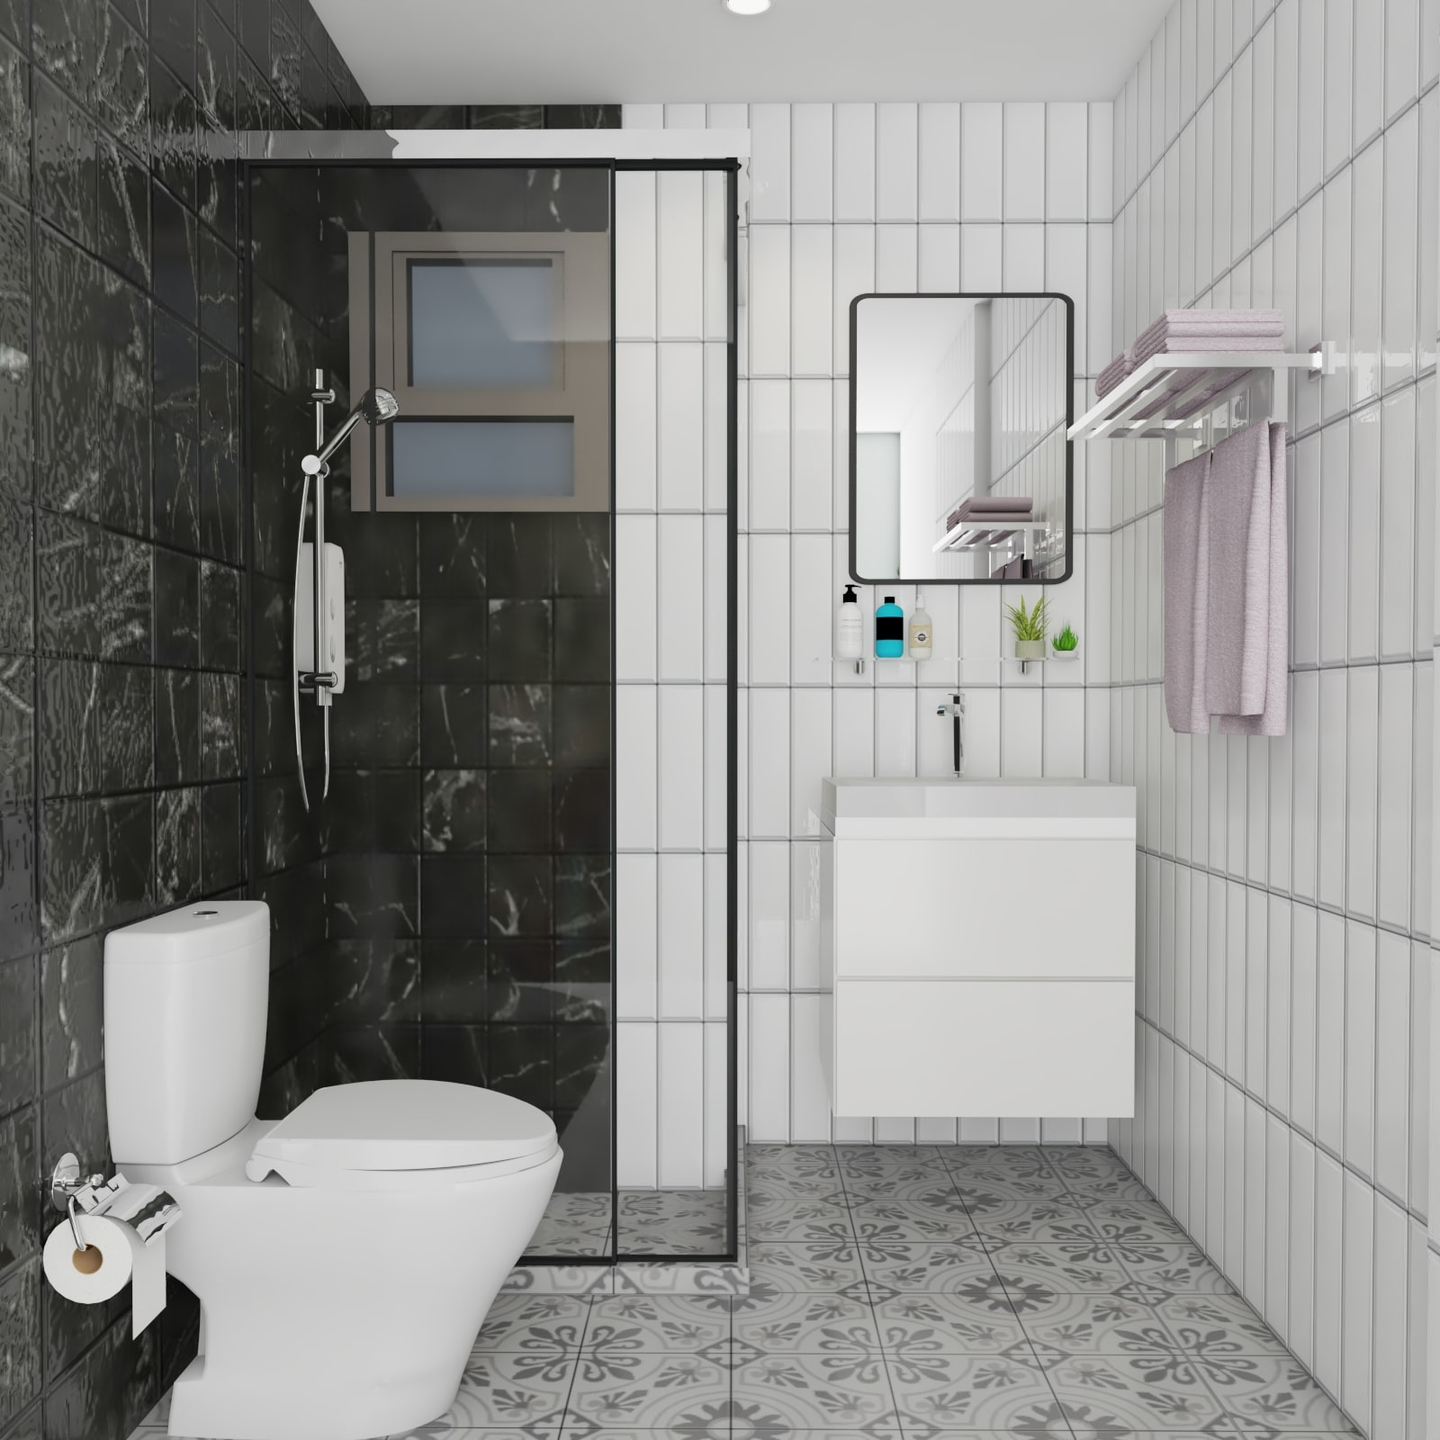 Compact Bathroom Design - Livspace